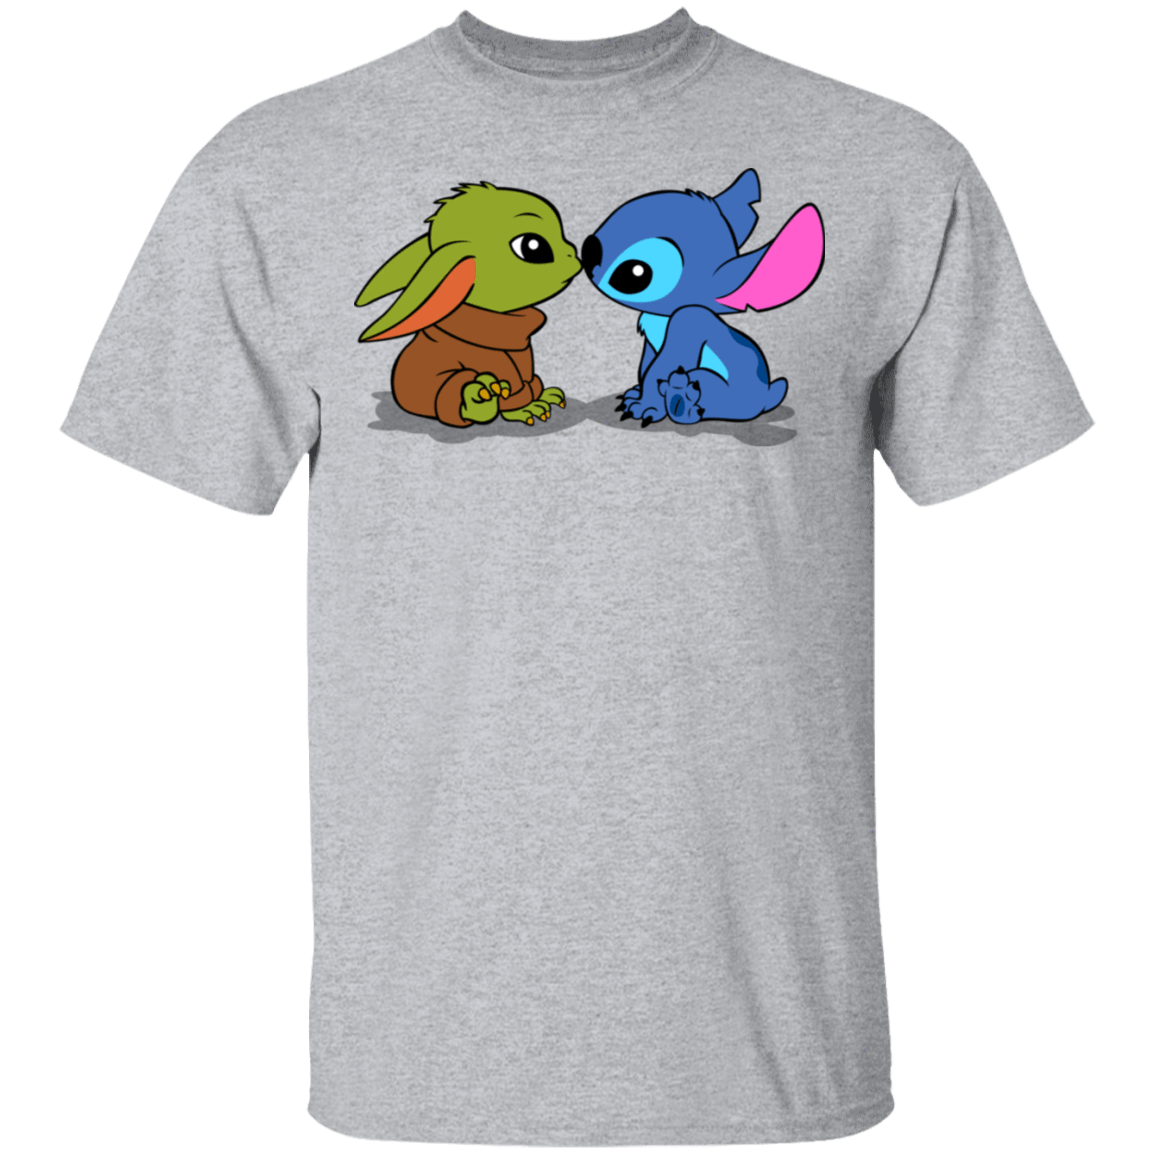 Stitch T-Shirt – Pop Up Tee